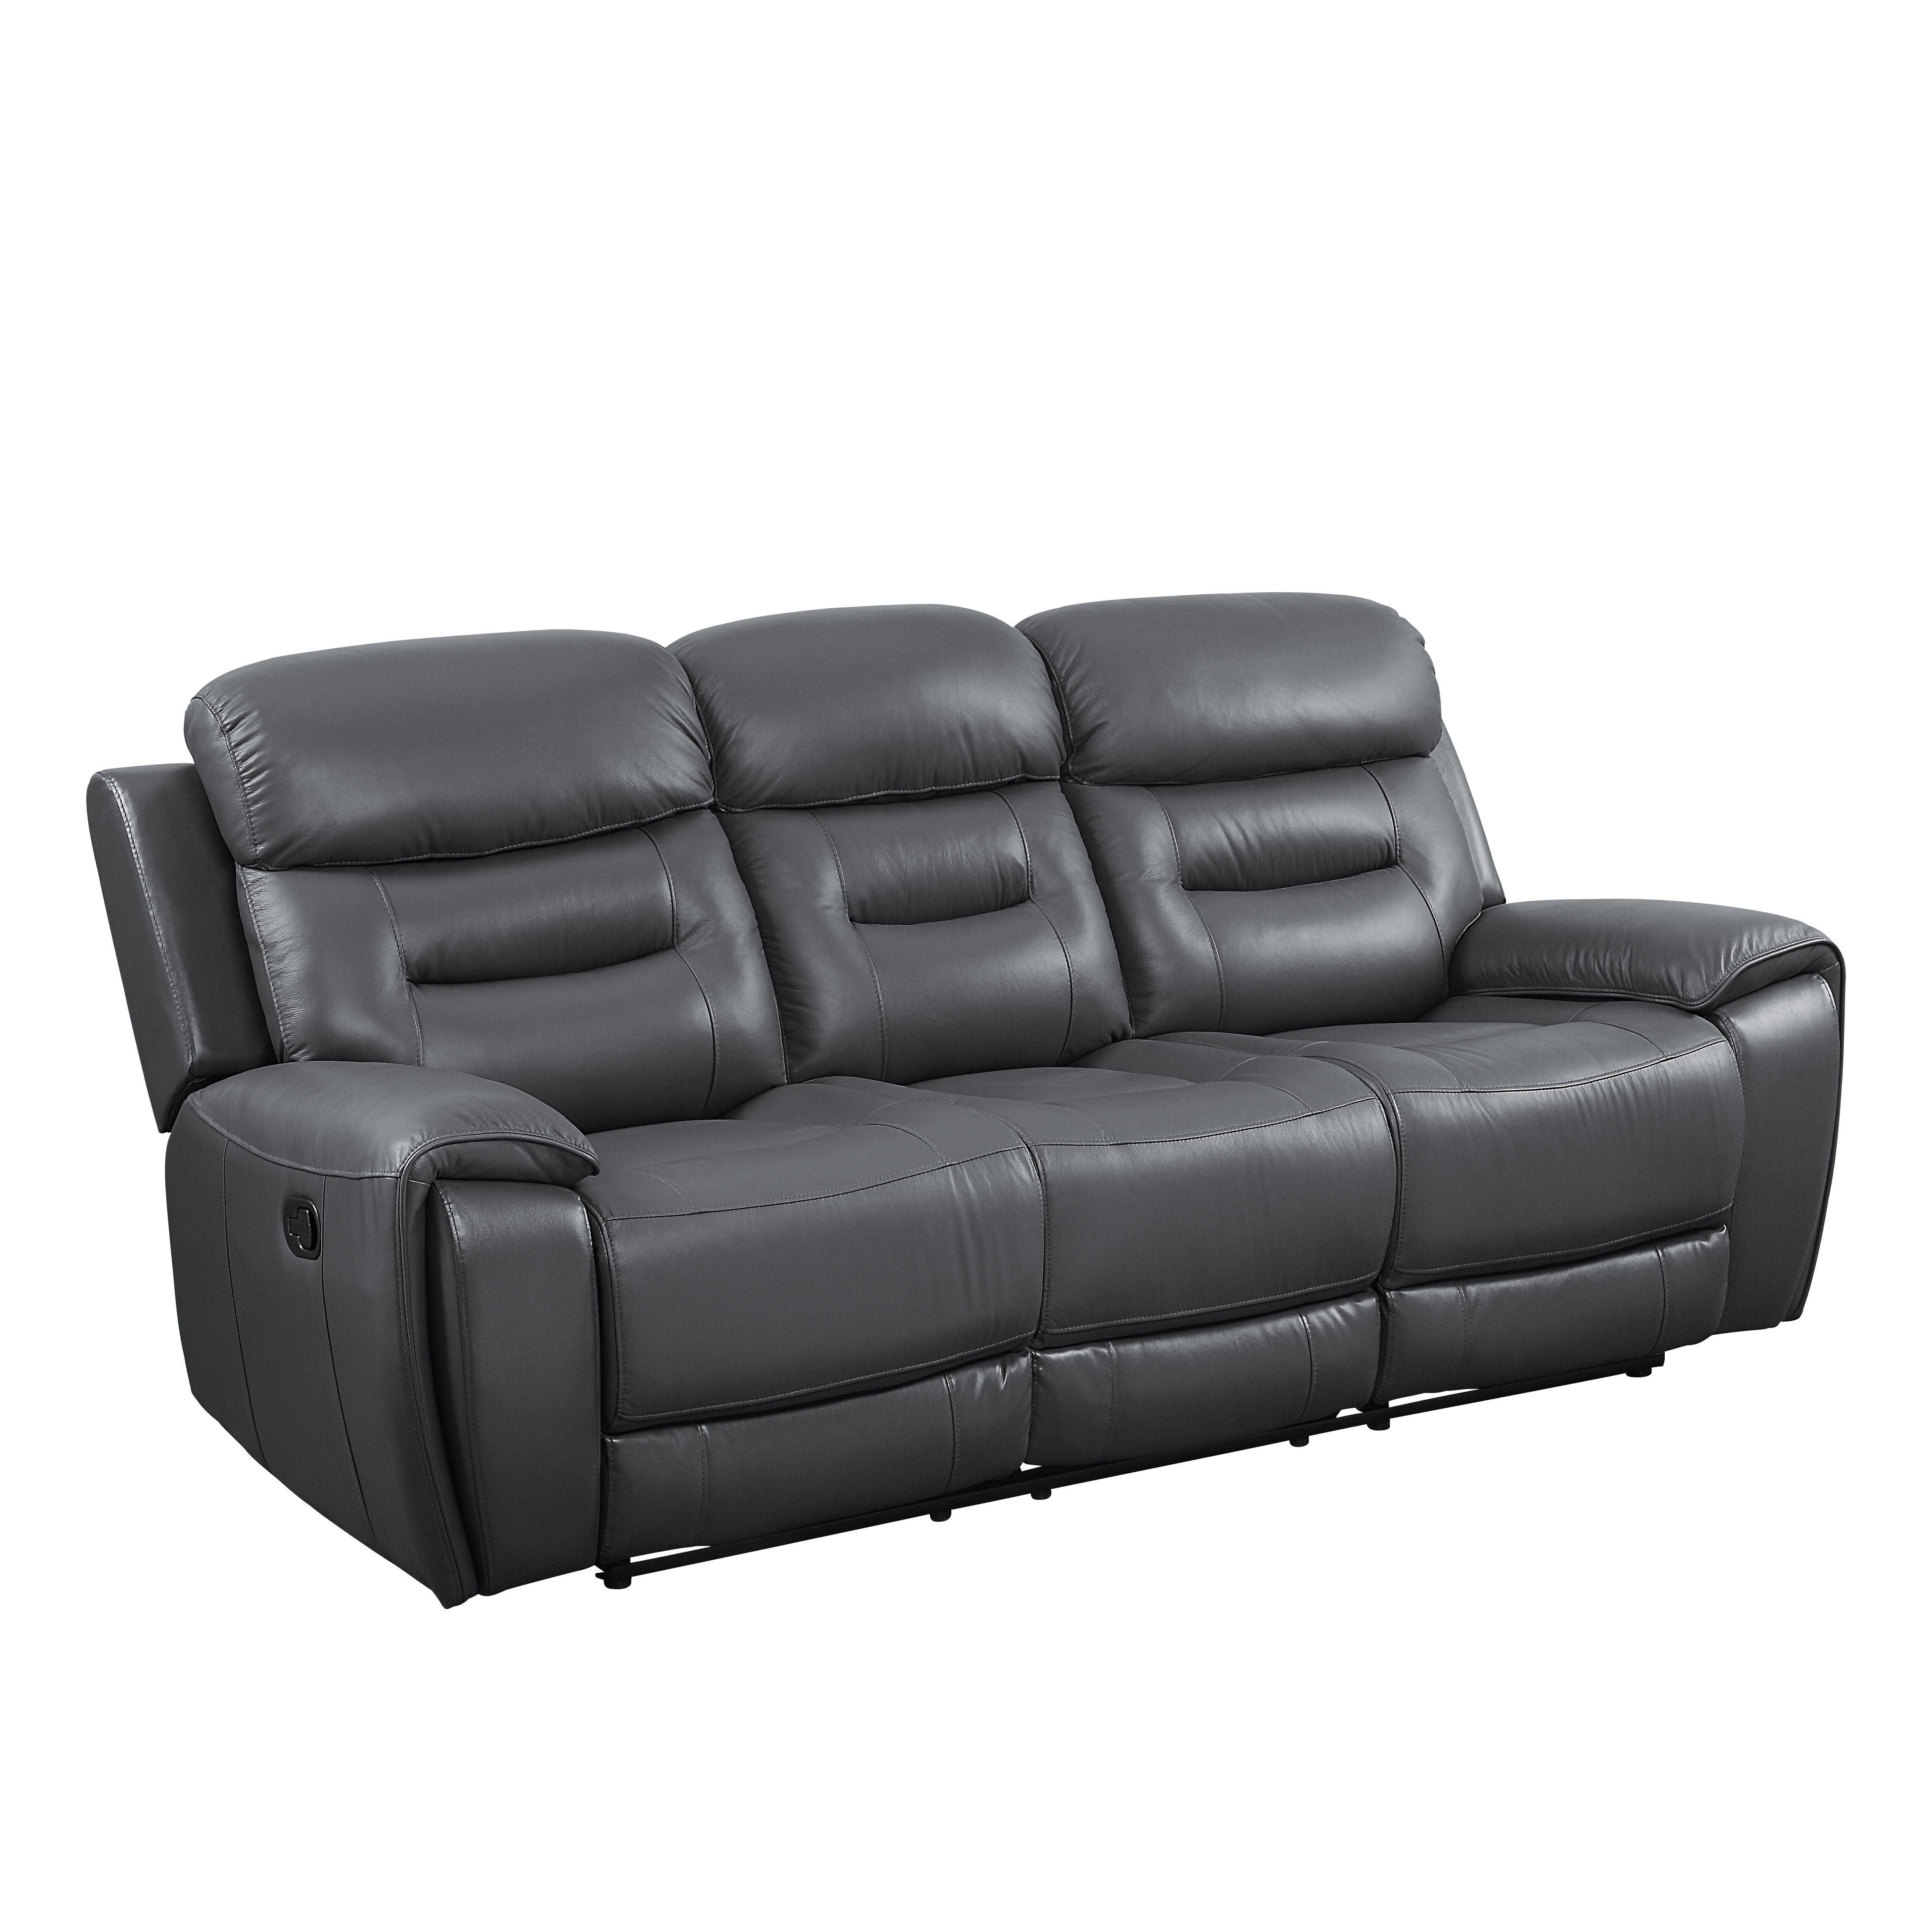 ACME - Lamruil - Sofa - Gray Top Grain Leather - 5th Avenue Furniture